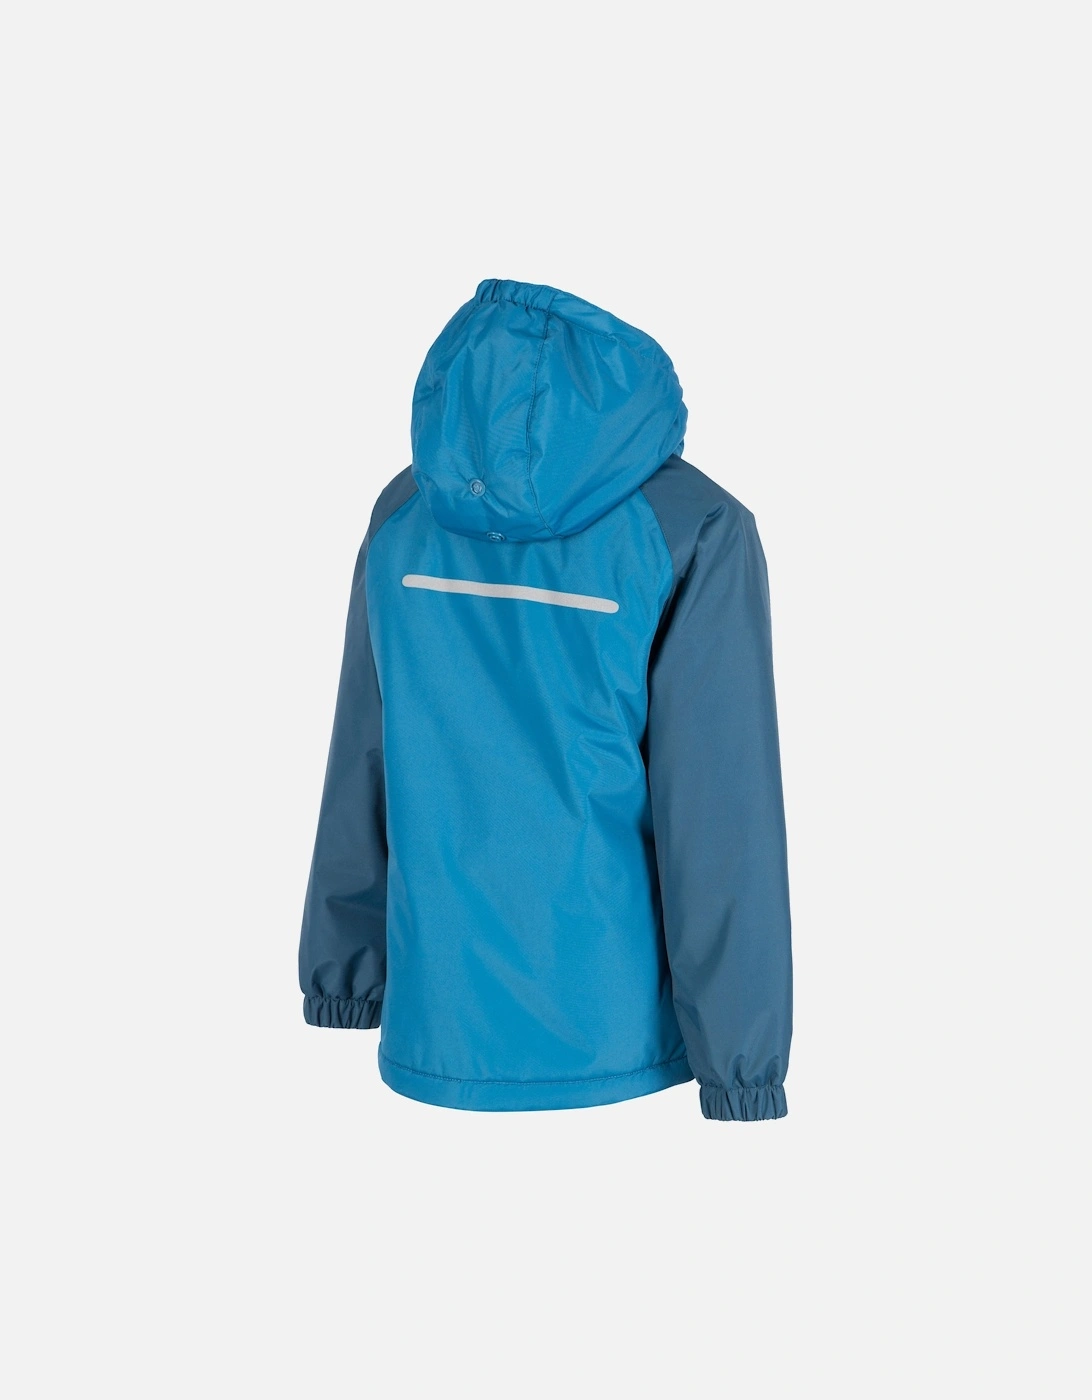 Childrens/Kids Tuneful Waterproof Jacket